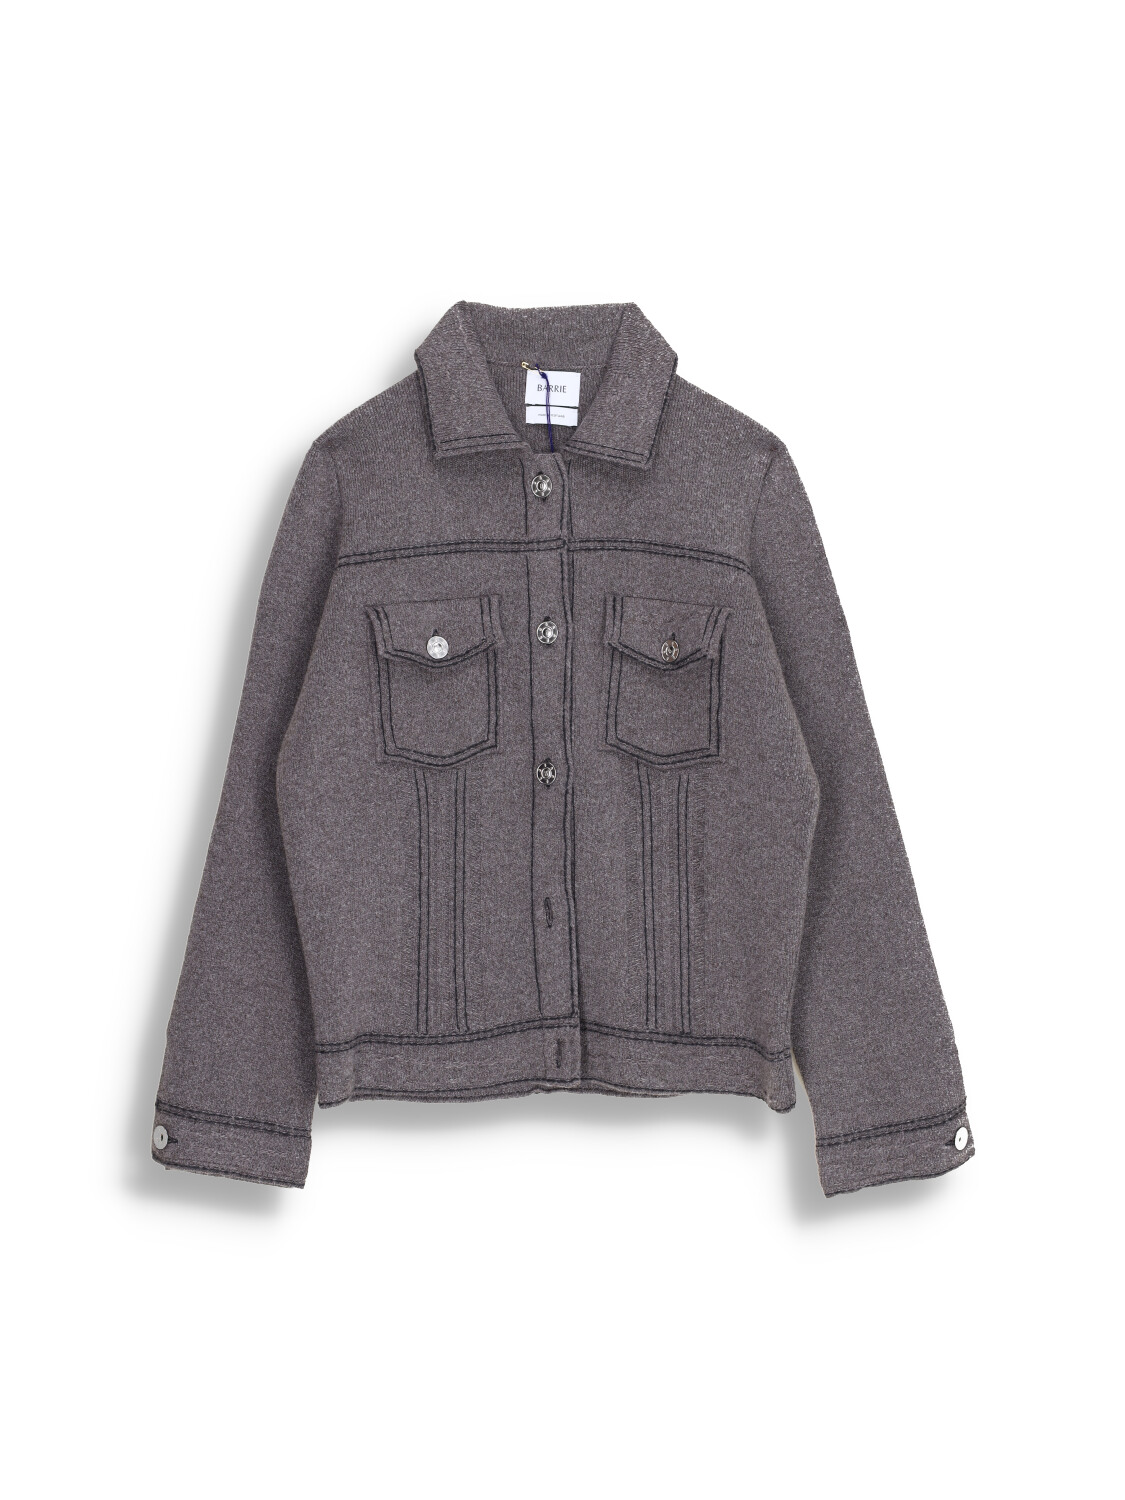 Denim Oversized Cashmere and Cotton Jacket - Cashmere jacket with patch pockets